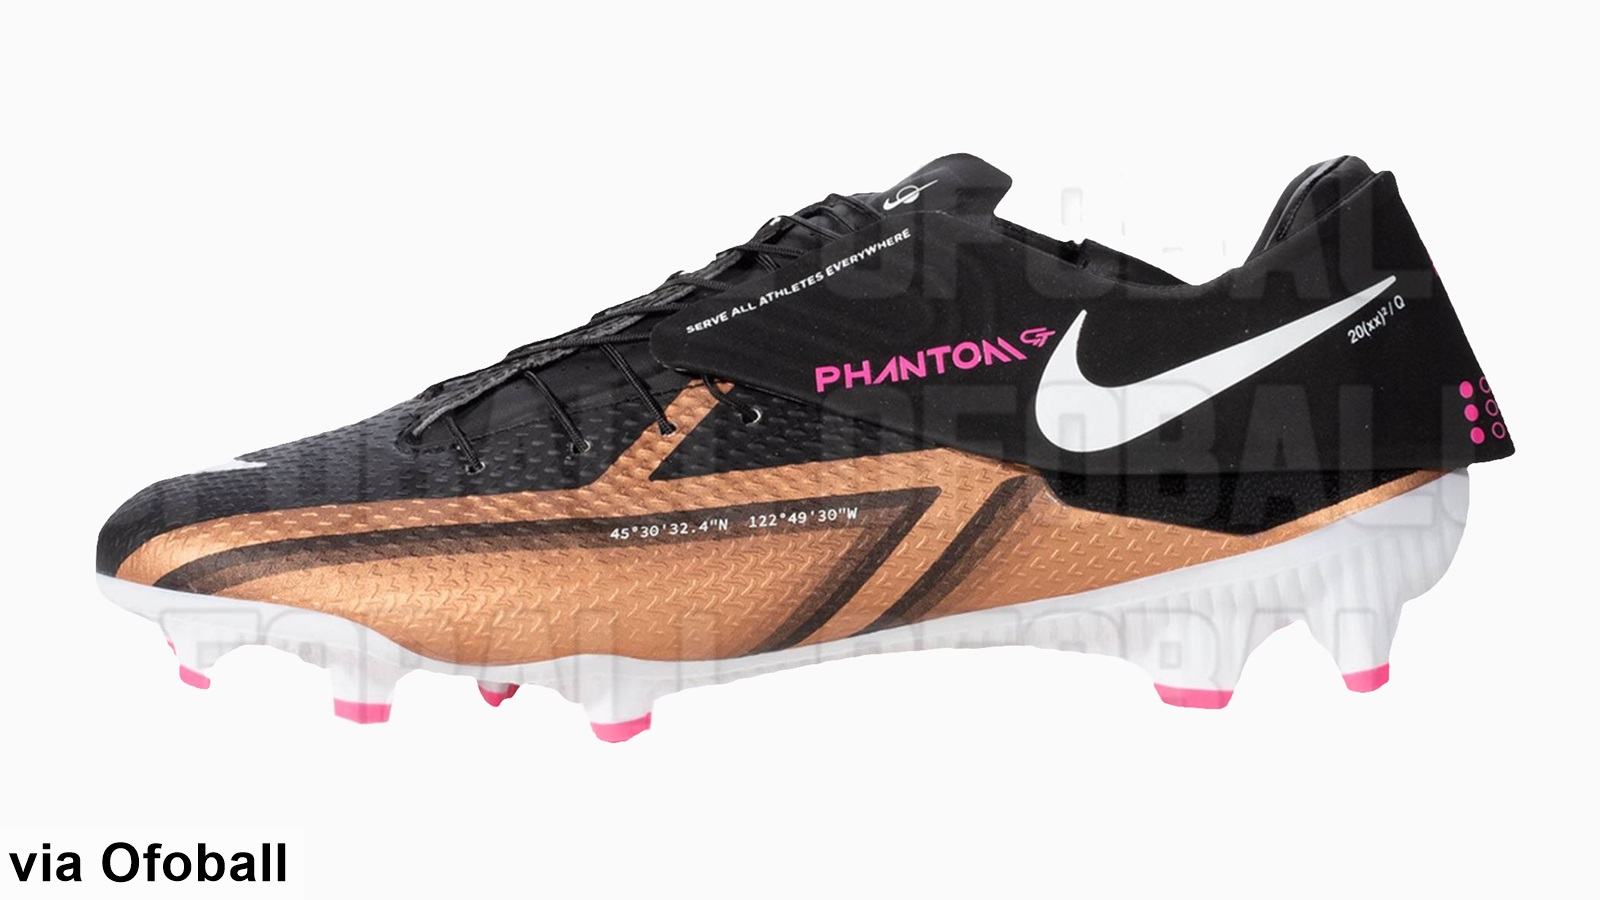 2022 World Cup Nike Phantom GT2 Elite FG Generation - Metallic  Copper/White/Black